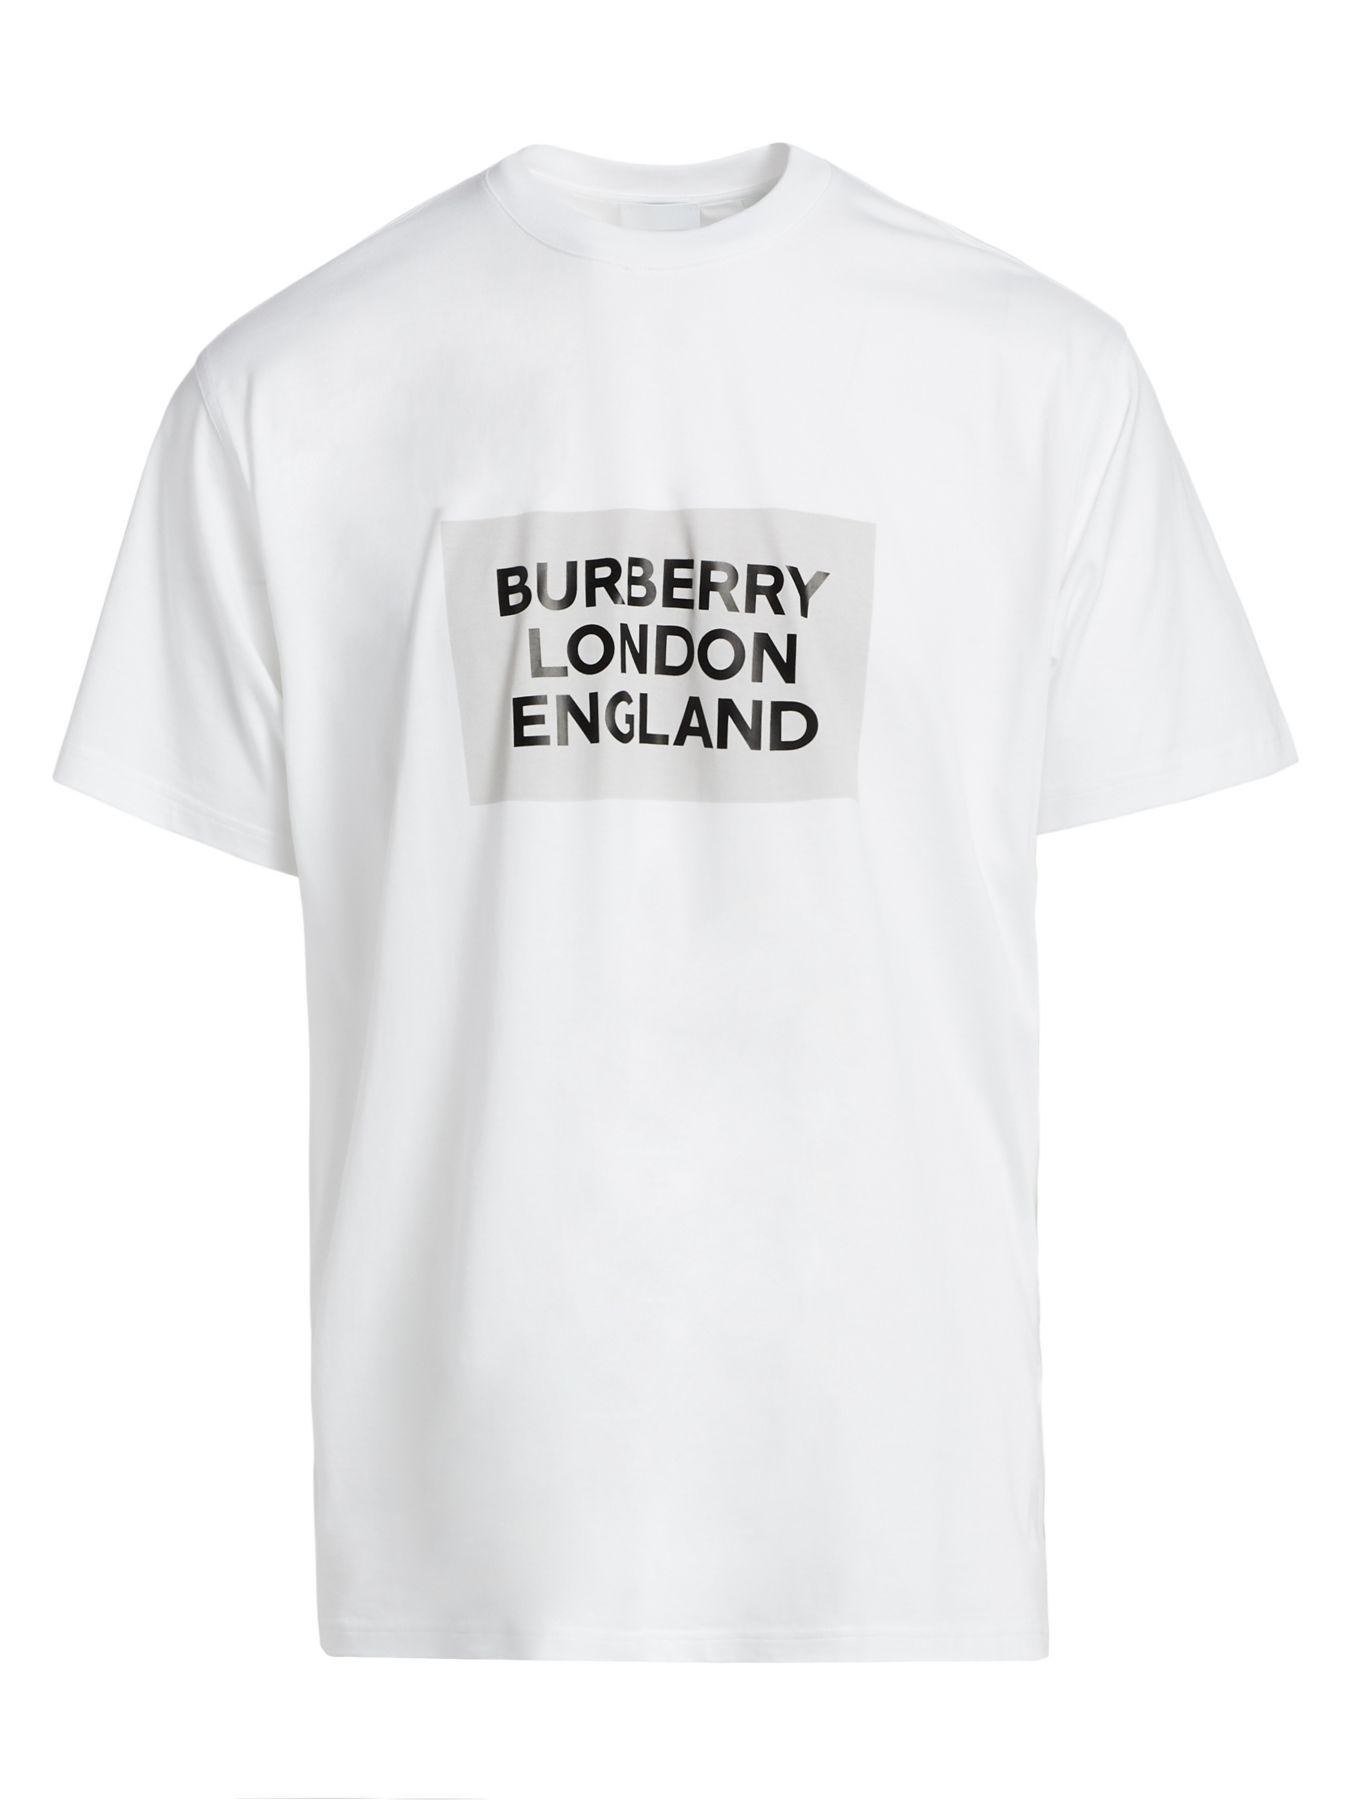 Burberry London England Logo Cotton T-shirt in White for Men - Lyst